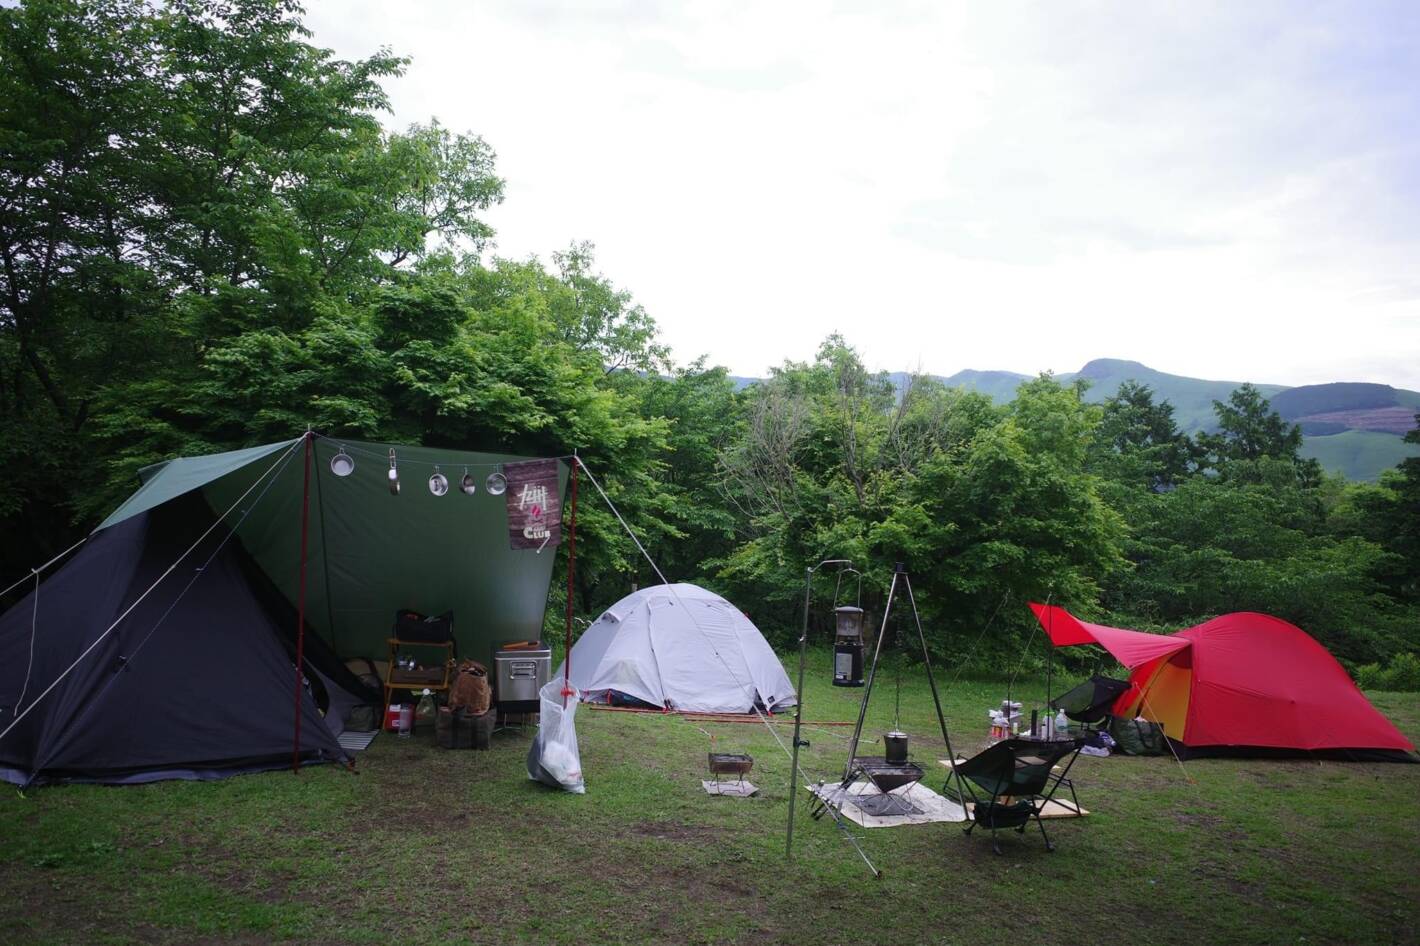 Shiho’s base camp